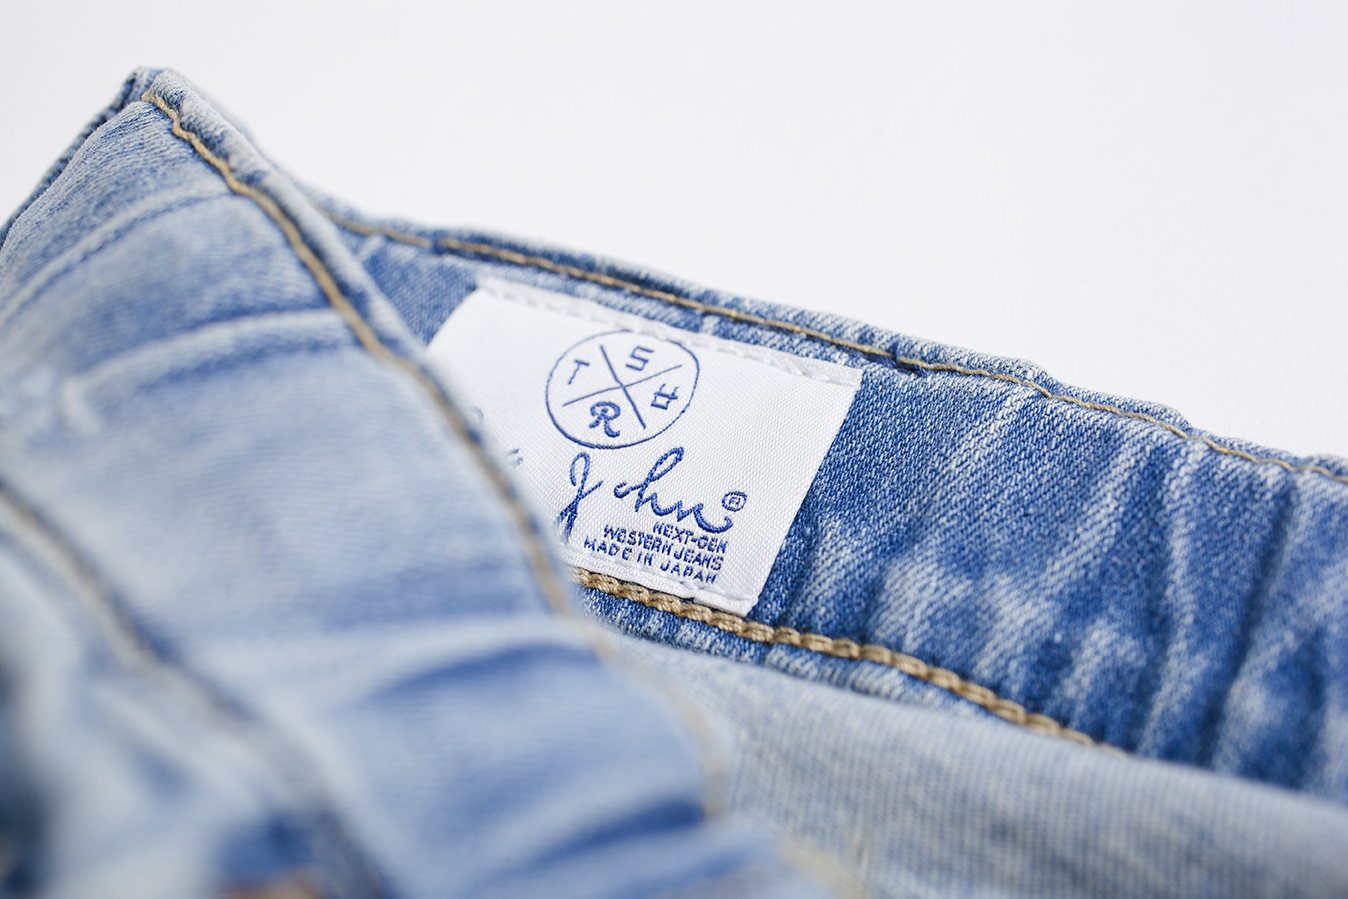 Jog Slim Tapered Jeans & Reversible Boa Jacket 